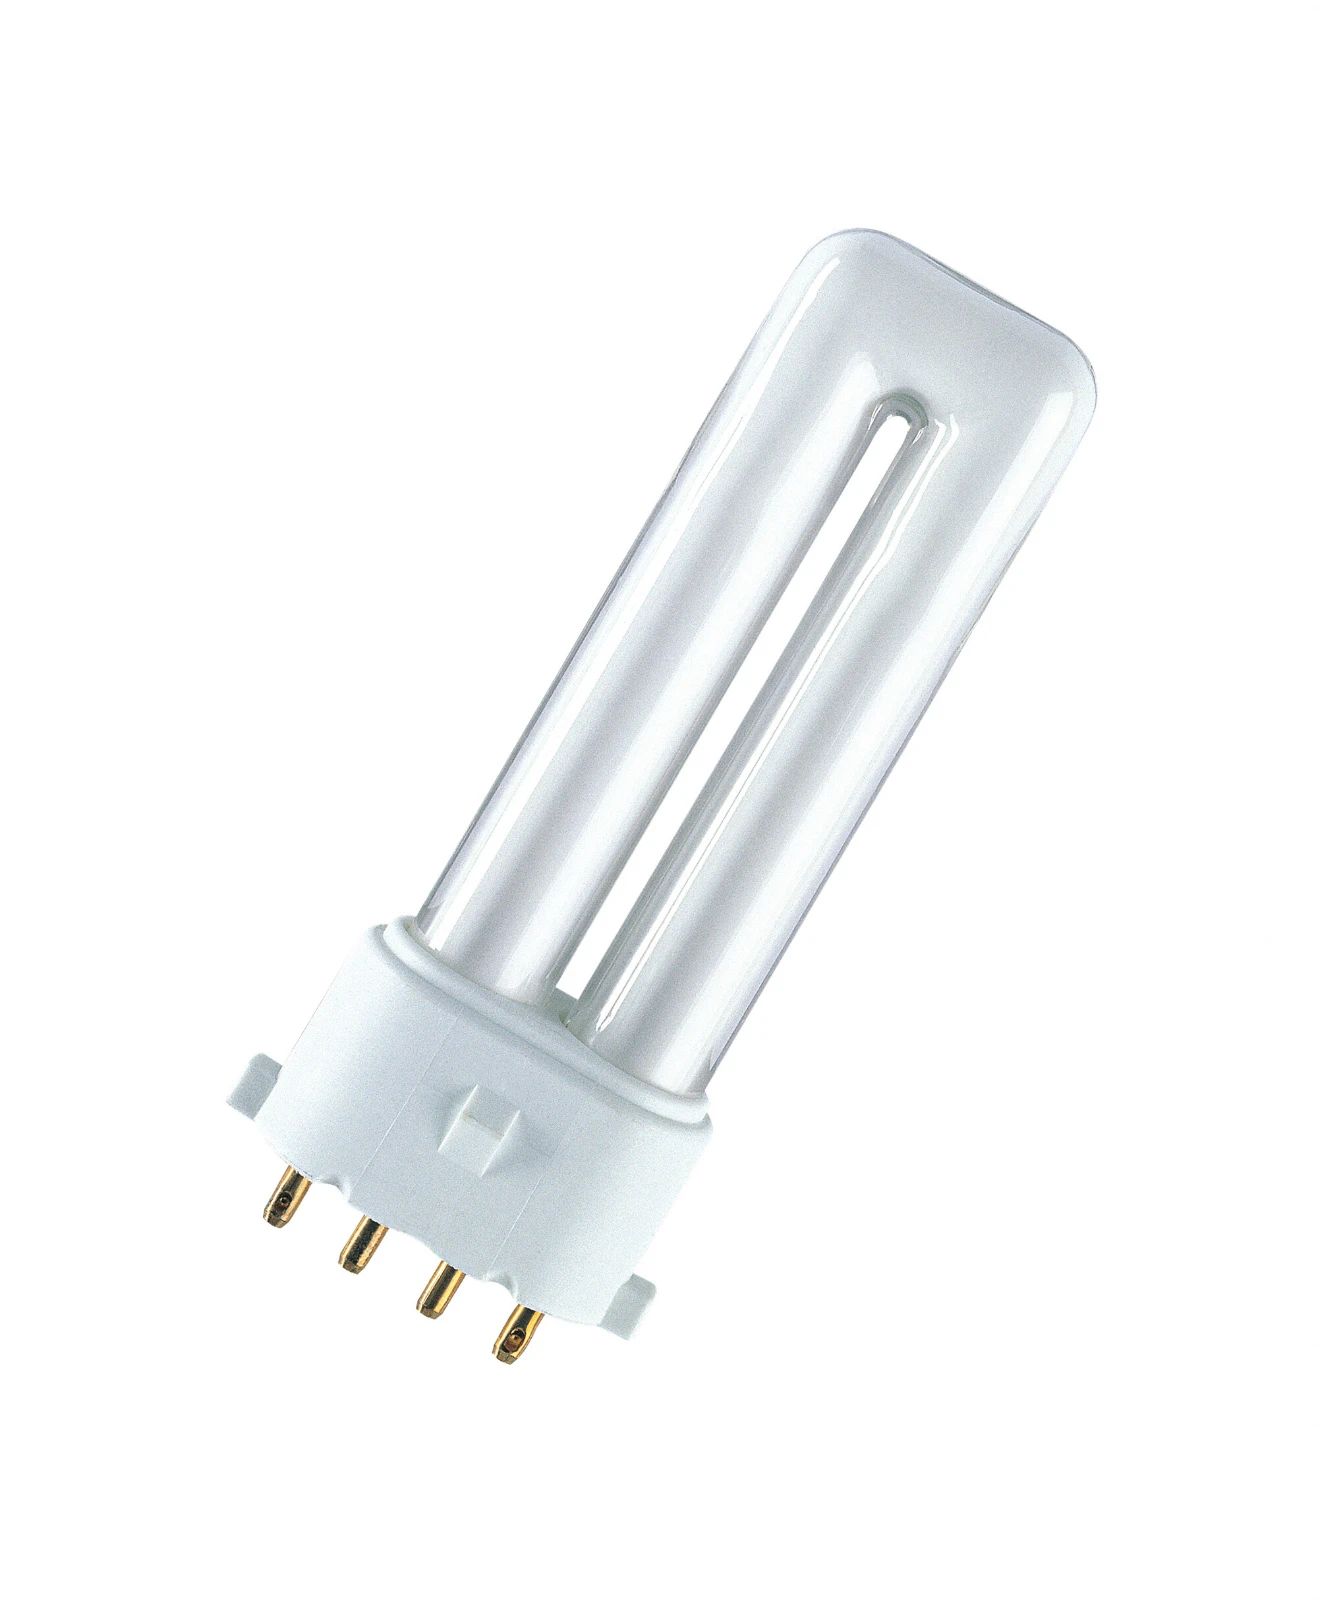 Osram Compact fluorescentielamp zonder geïntegreerd voorschakelapparaat DULUX S/E 11W/840 2G7 FS1